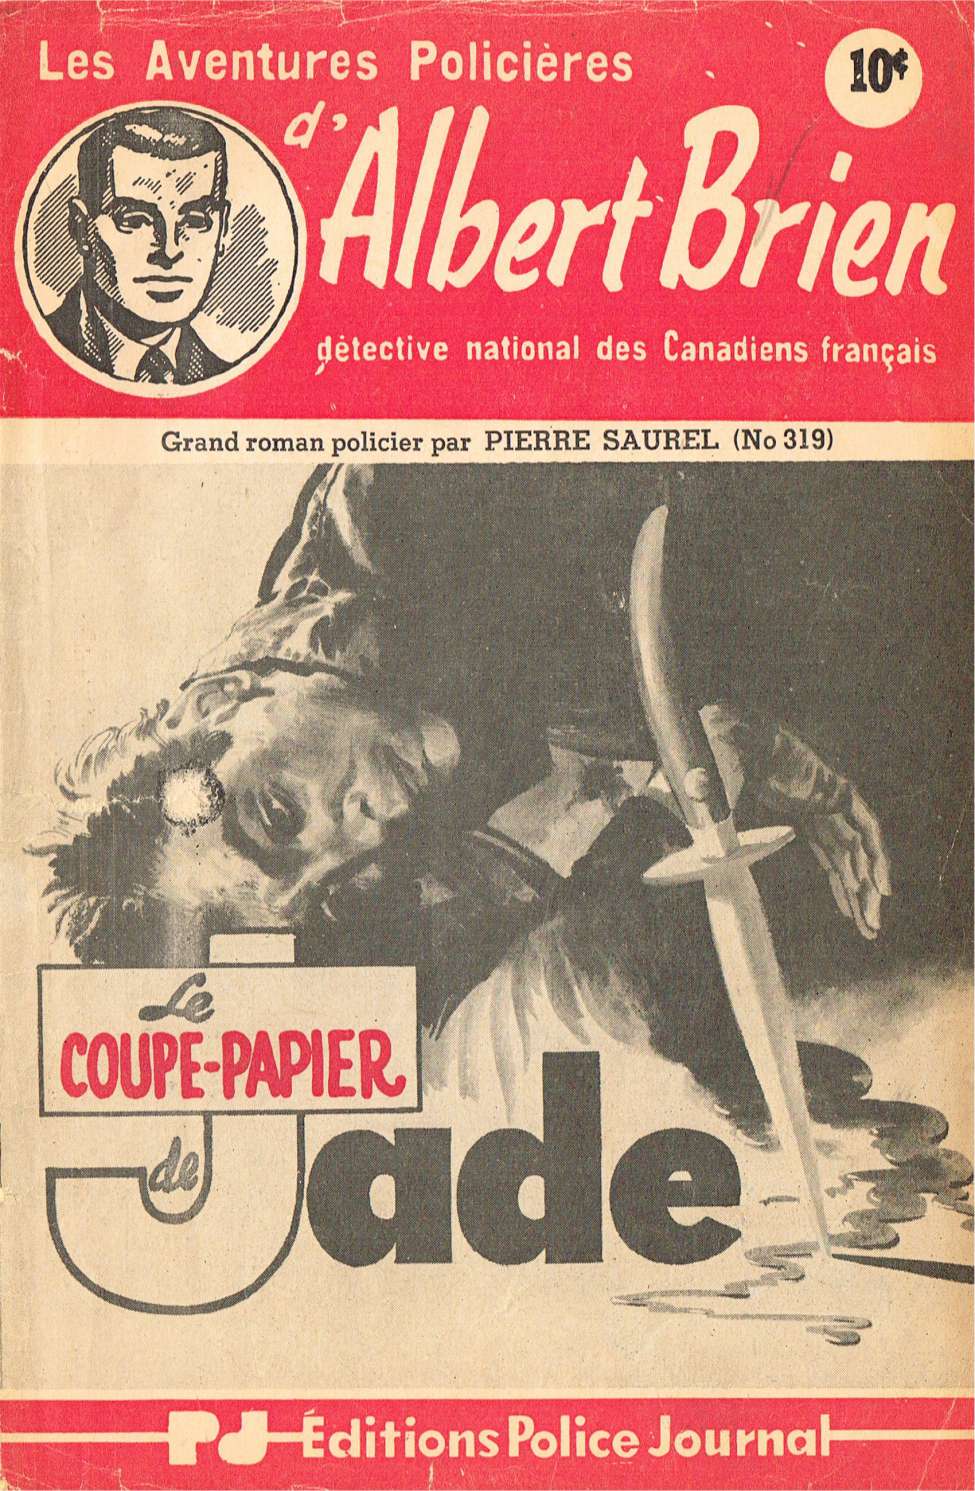 Book Cover For Albert Brien v2 319 - Le coupe-papier de jade